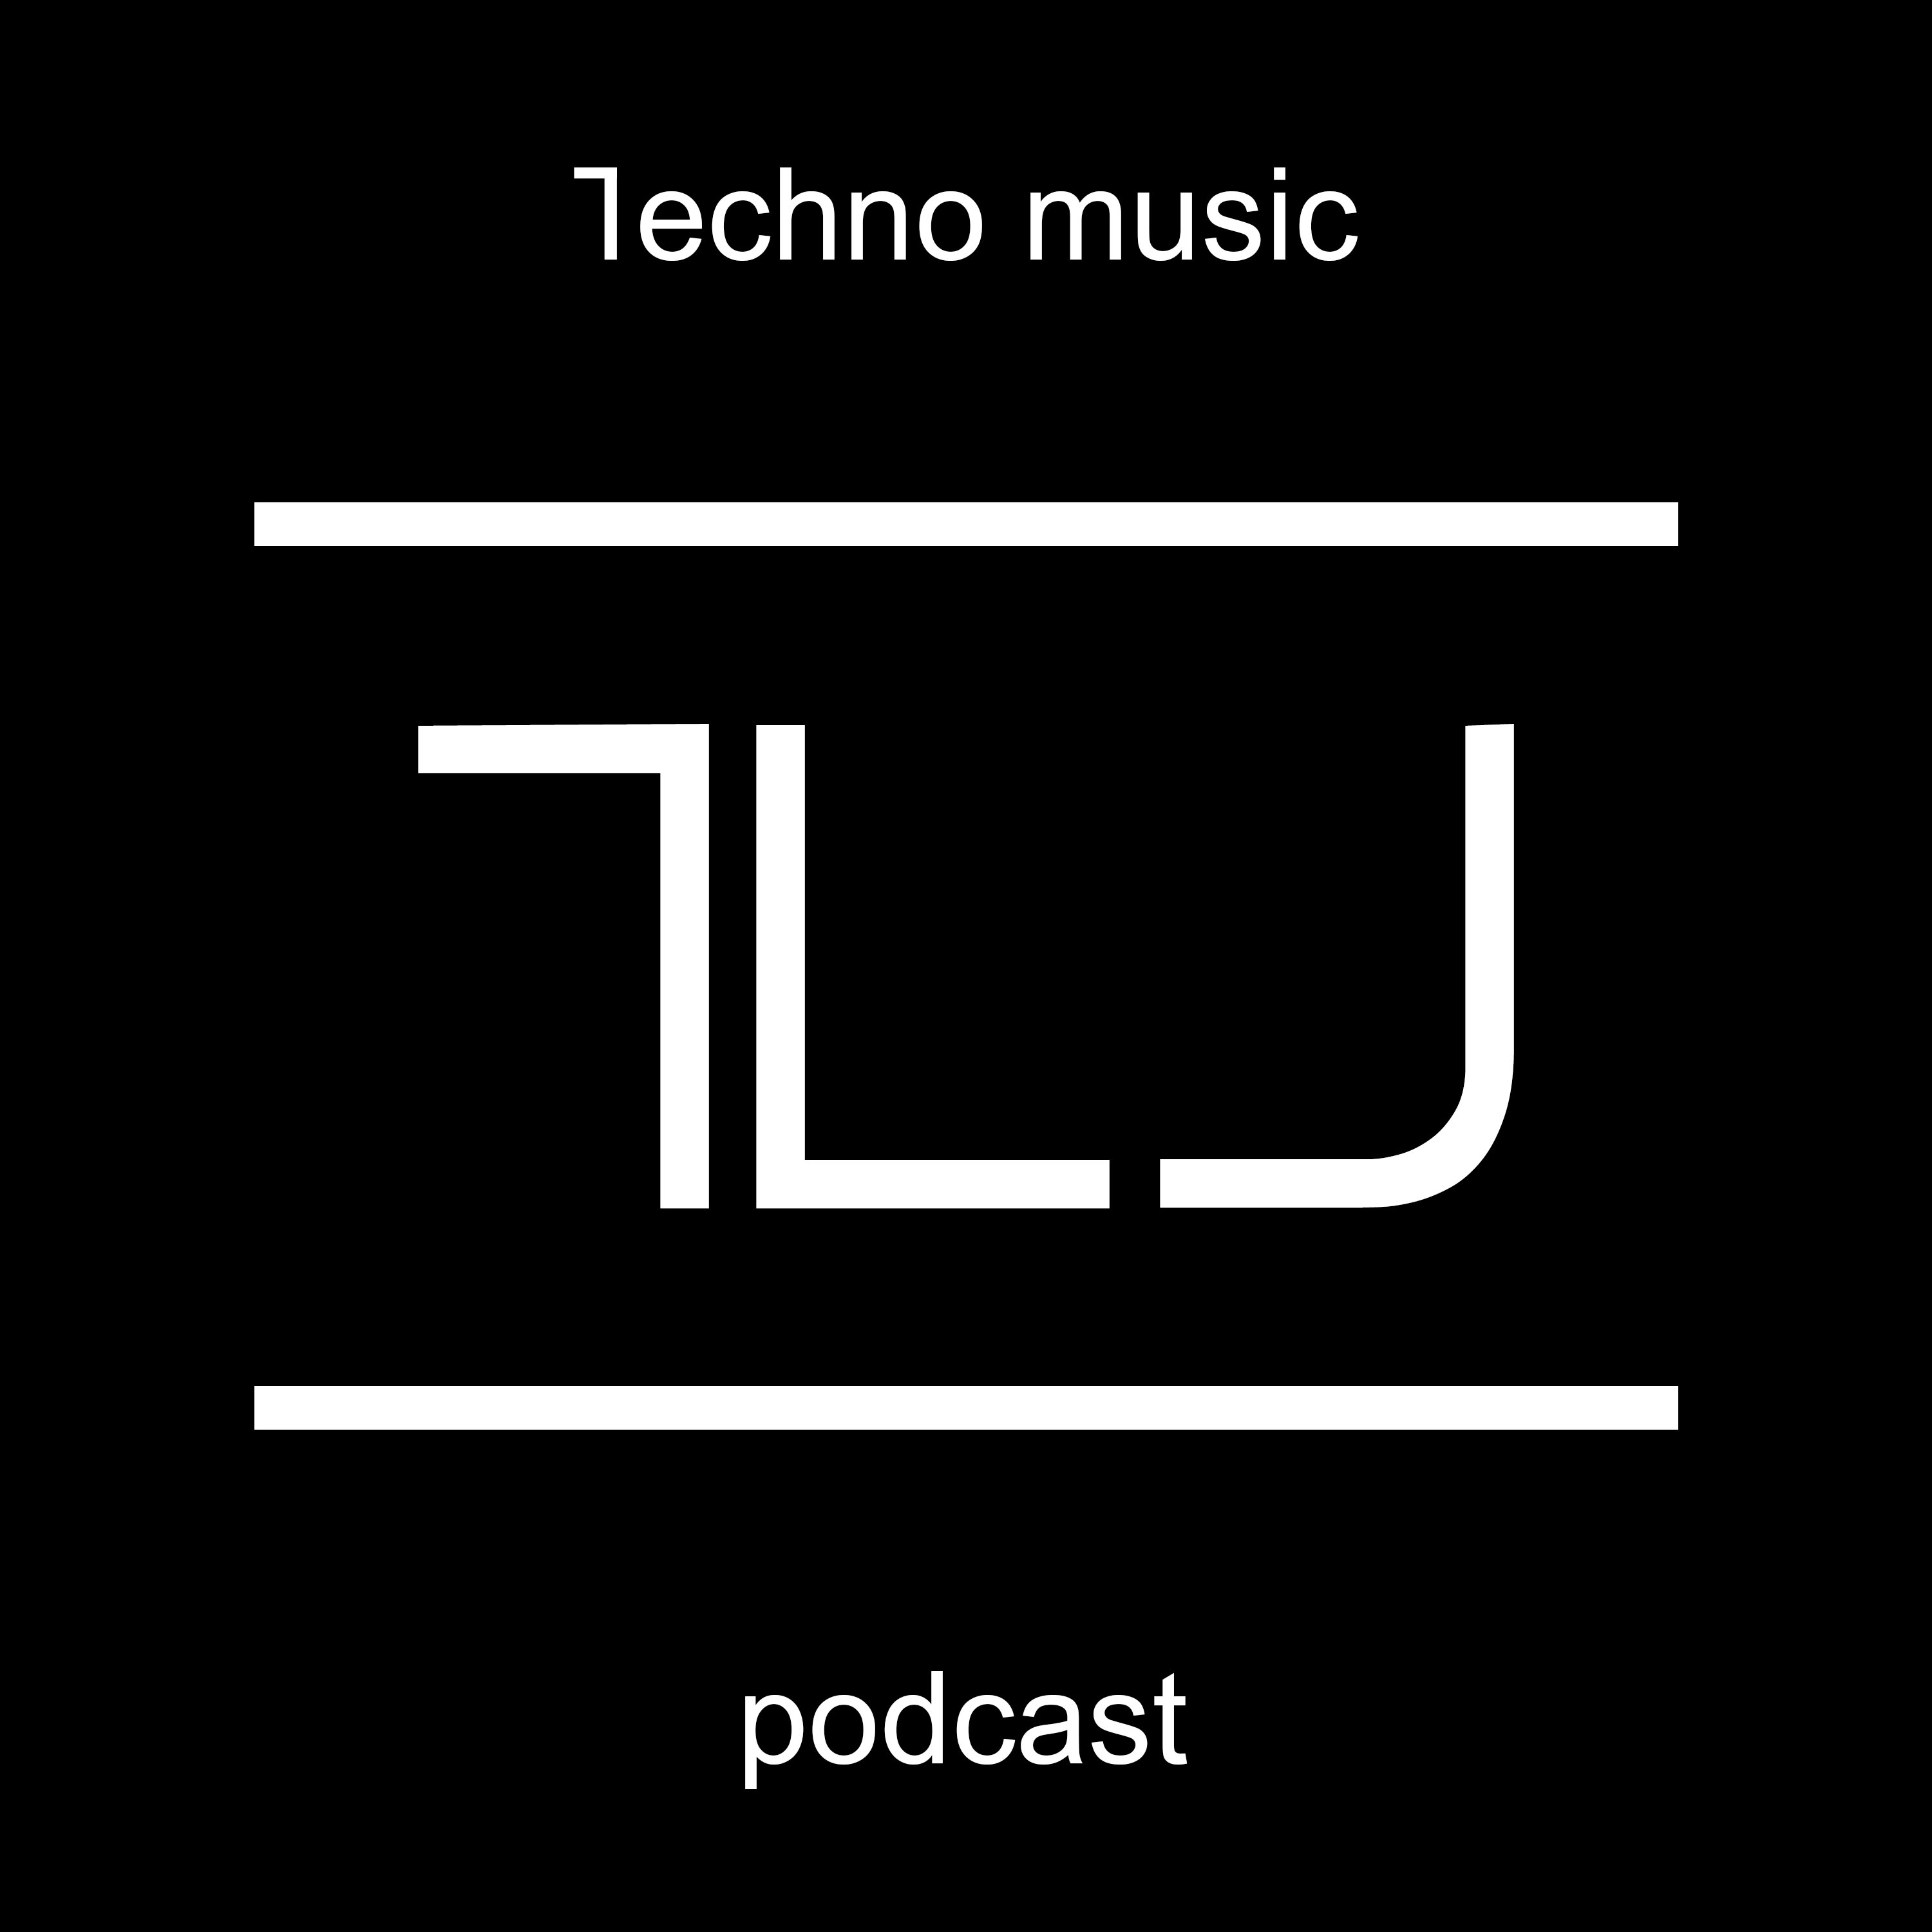 TLJ Techno Music Podcast